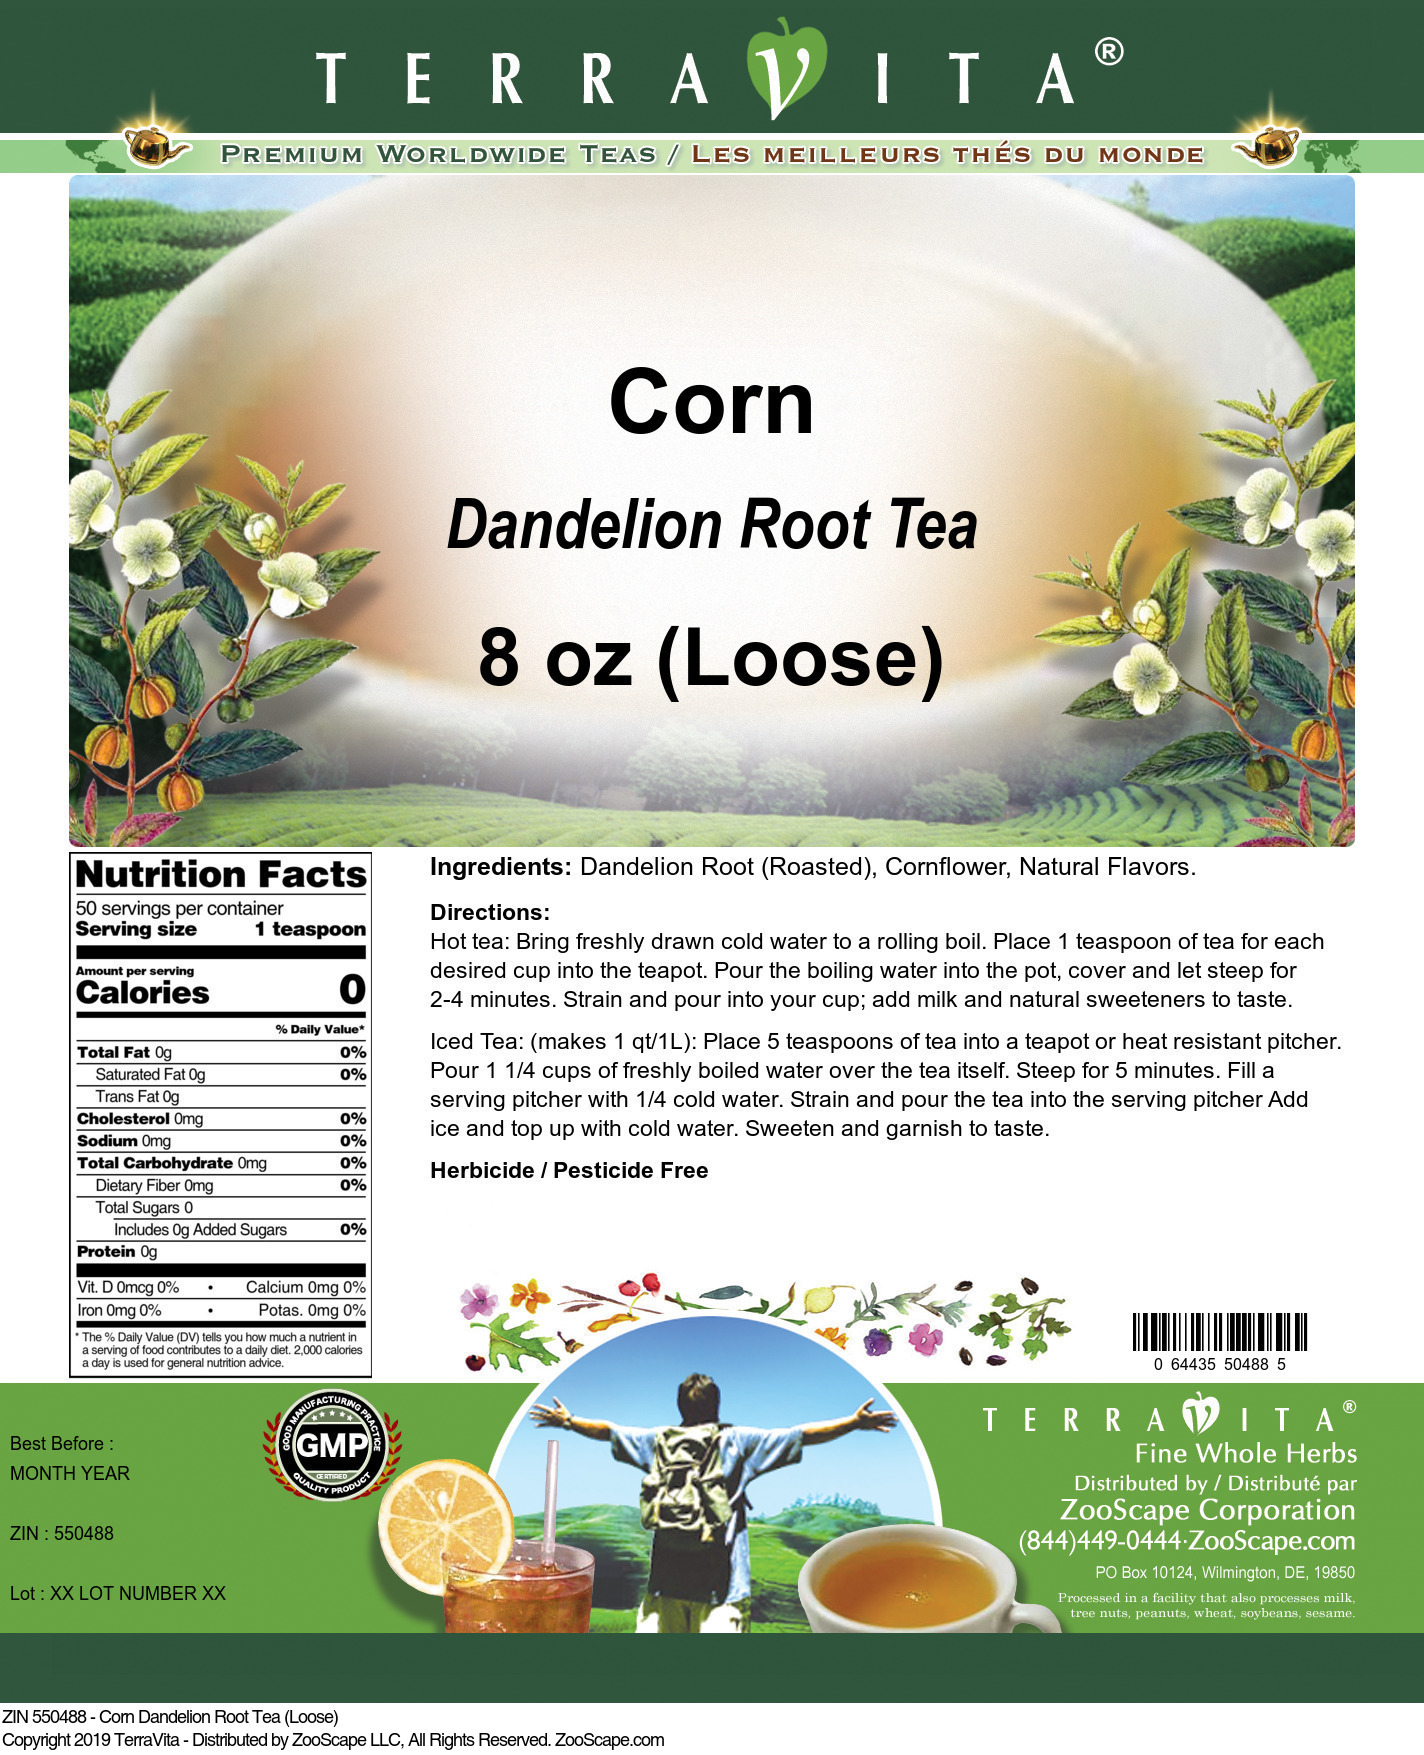 Corn Dandelion Root Tea (Loose) - Label